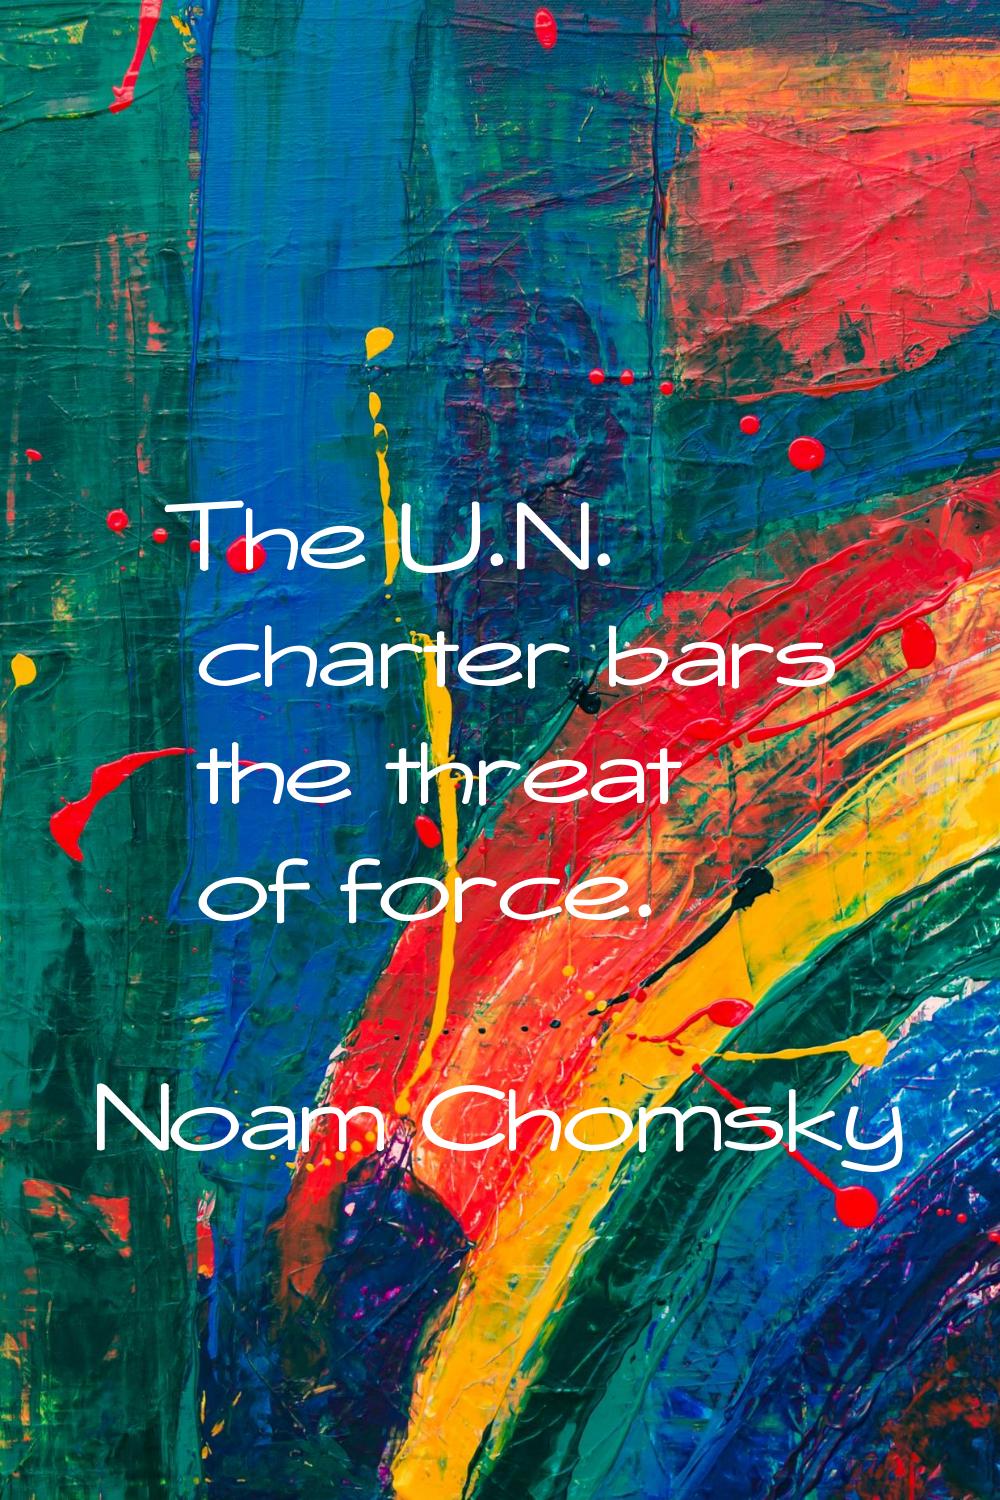 The U.N. charter bars the threat of force.